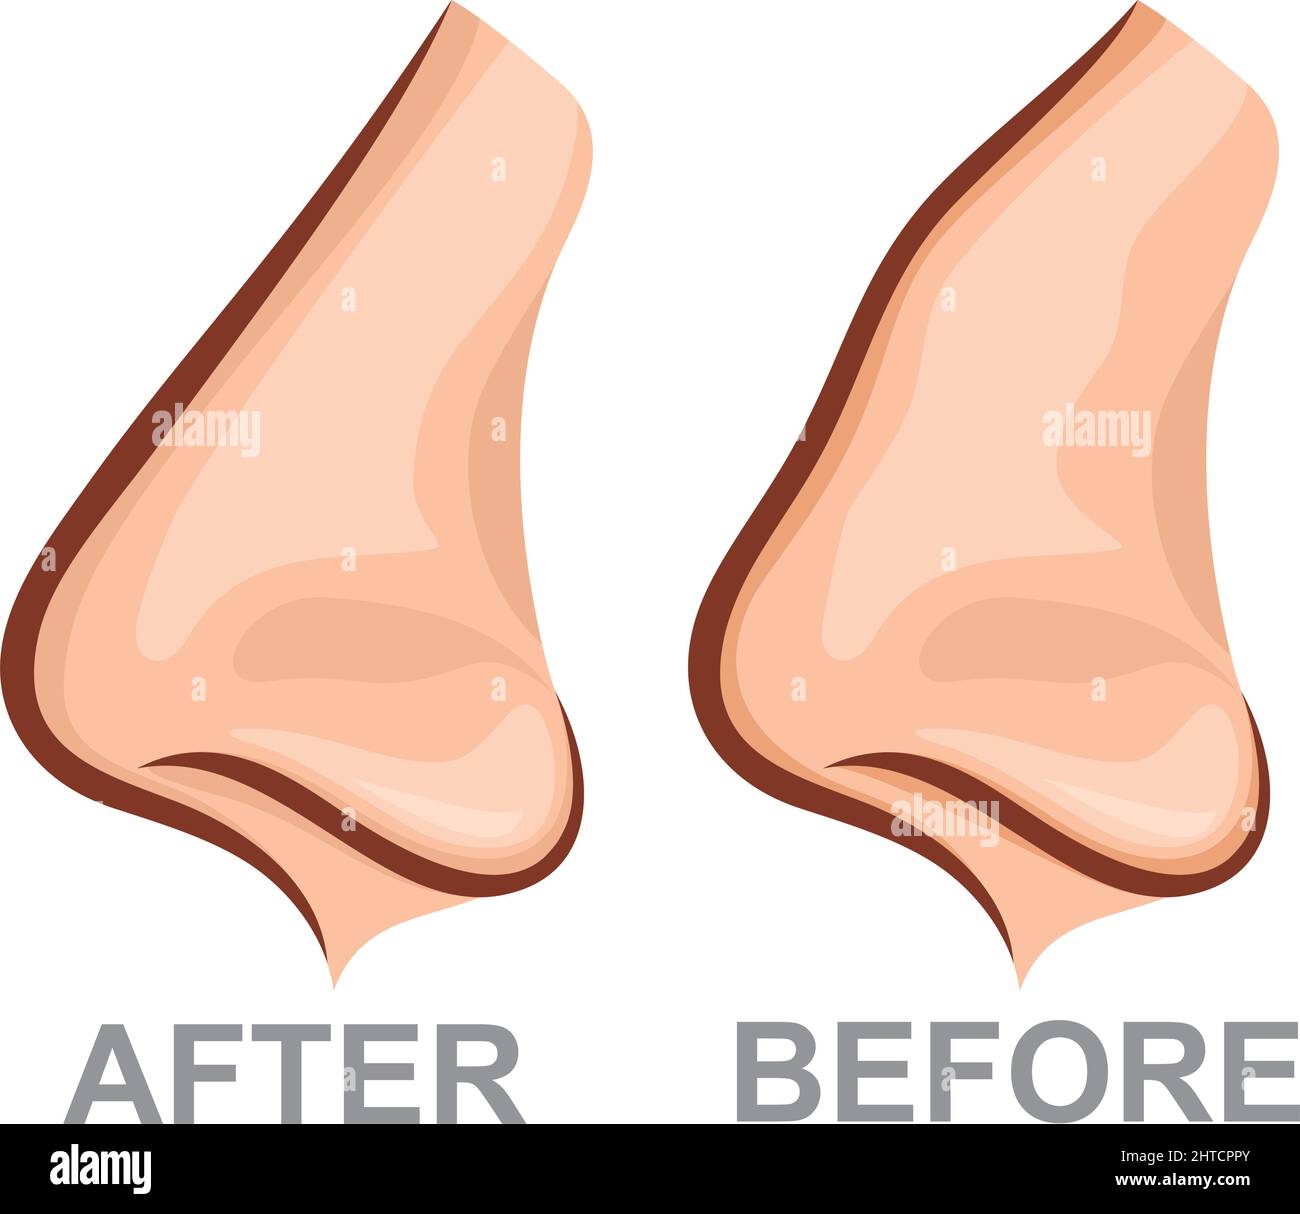 Illustration du vecteur de rhinoplastie avant et après le nez Illustration de Vecteur